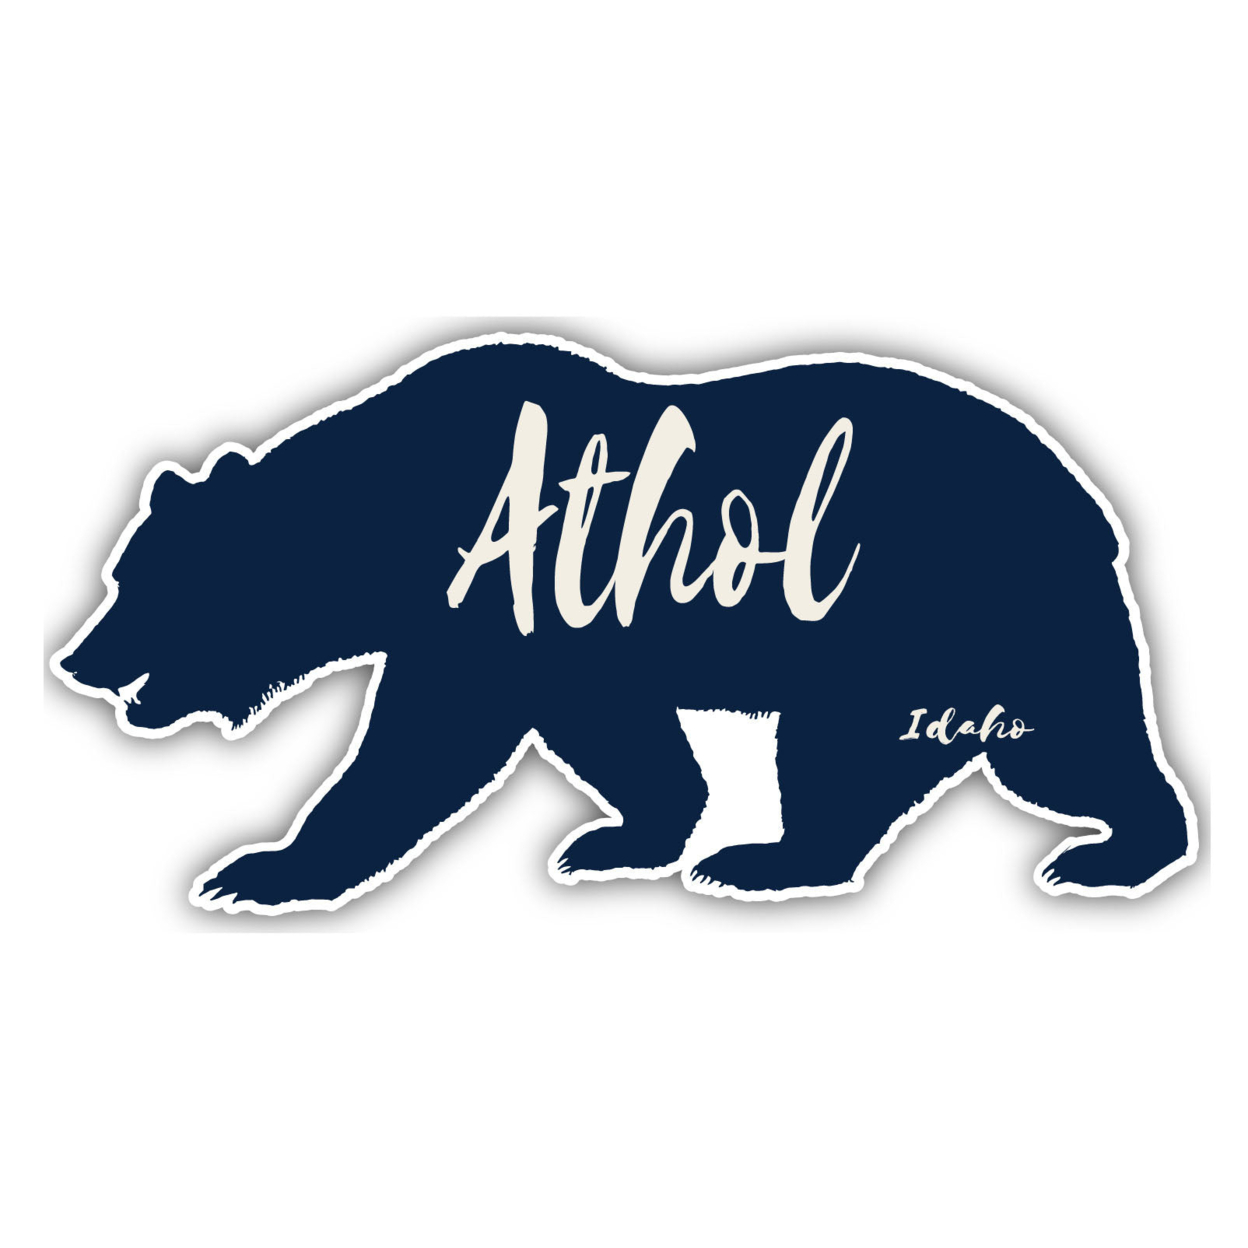 Athol Idaho Souvenir Decorative Stickers (Choose Theme And Size) - Single Unit, 8-Inch, Bear